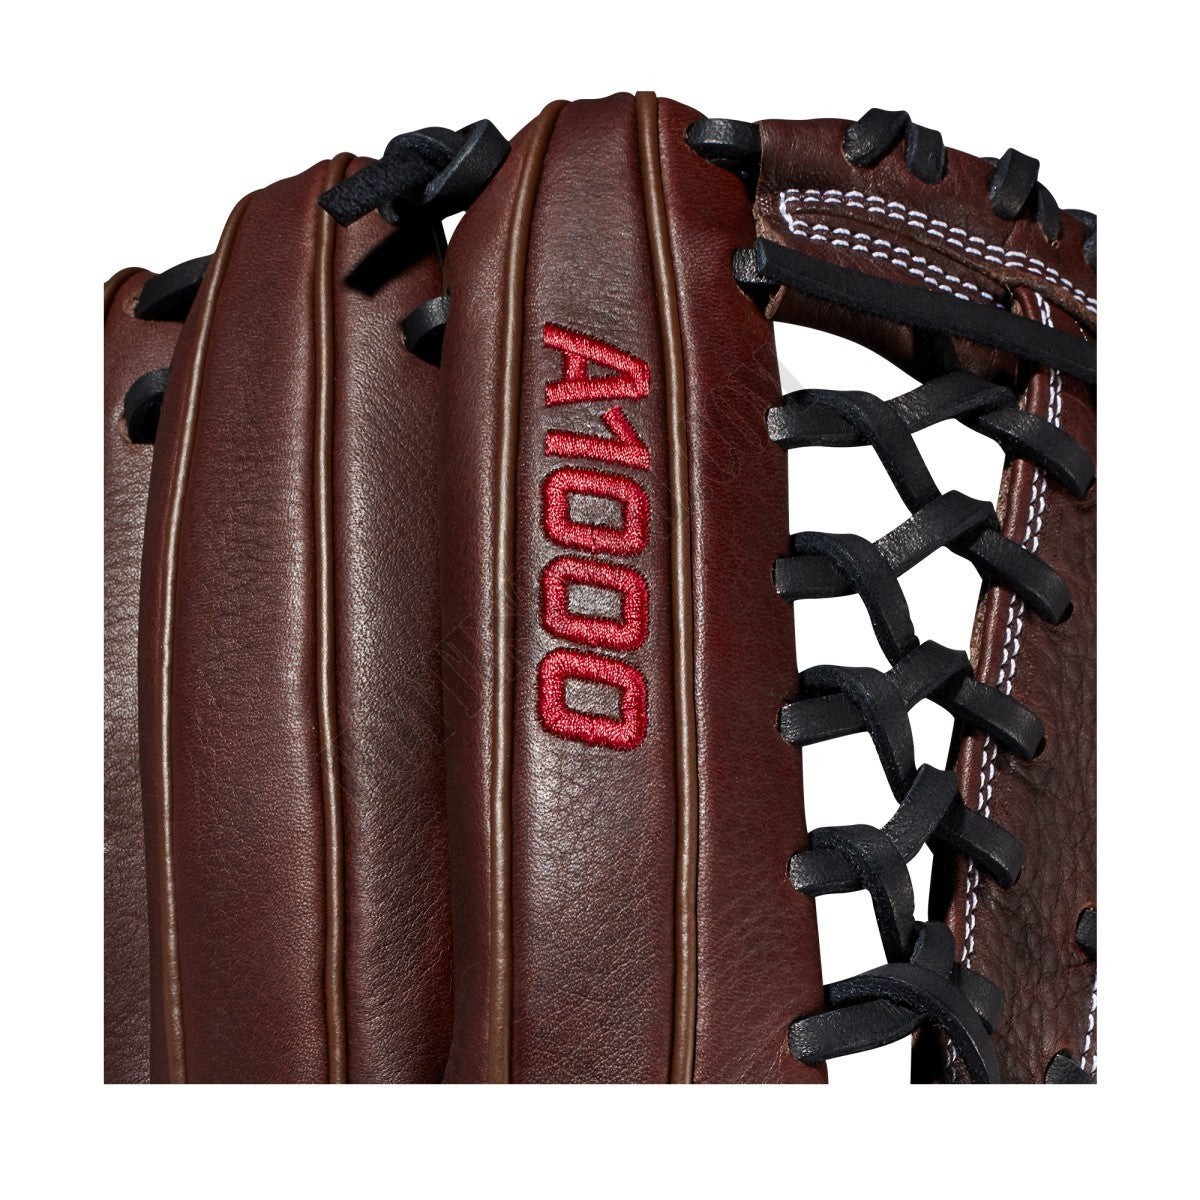 2020 A1000 KP92 12.5" Baseball Glove ● Wilson Promotions - -6